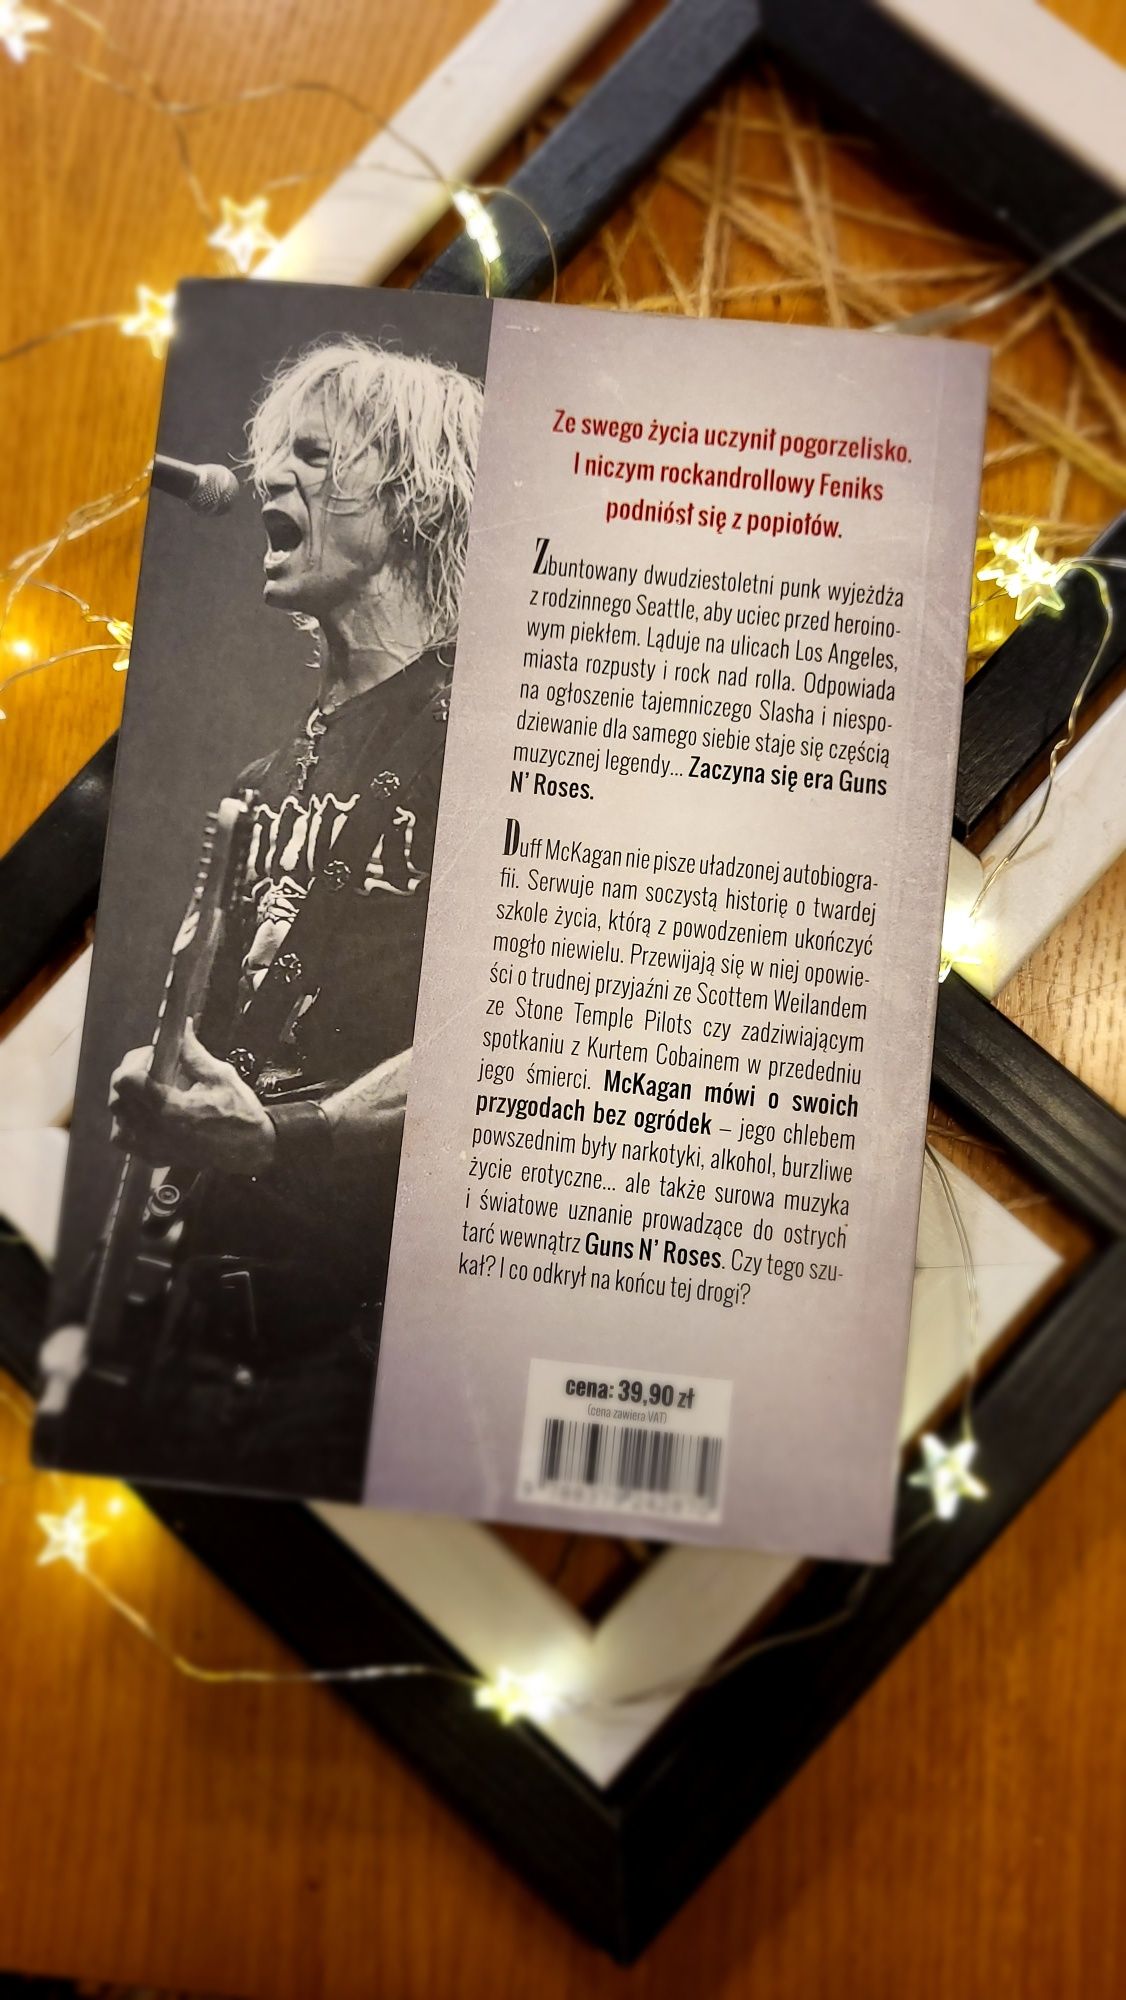 Duff McKagan Sex, drugs & rock n'roll Guns n'Roses autobiografia